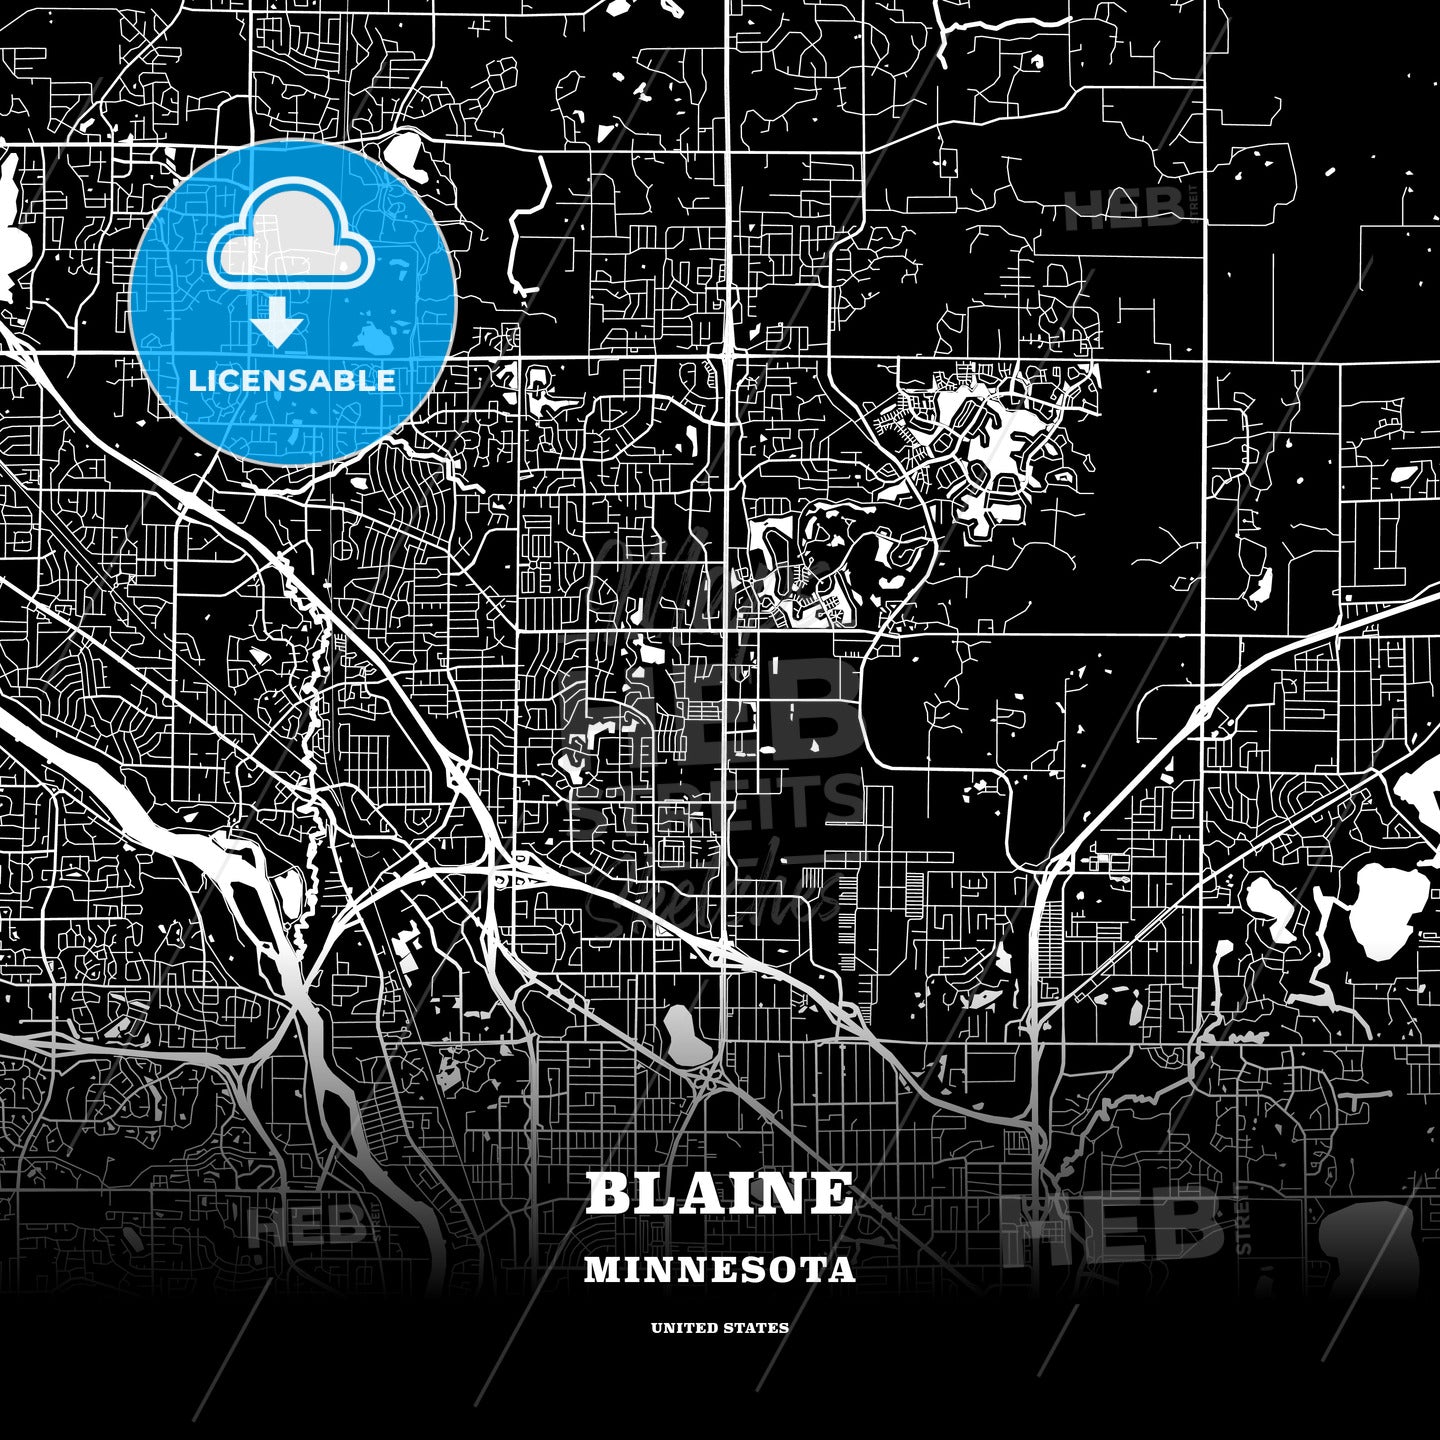 Blaine, Minnesota, USA map